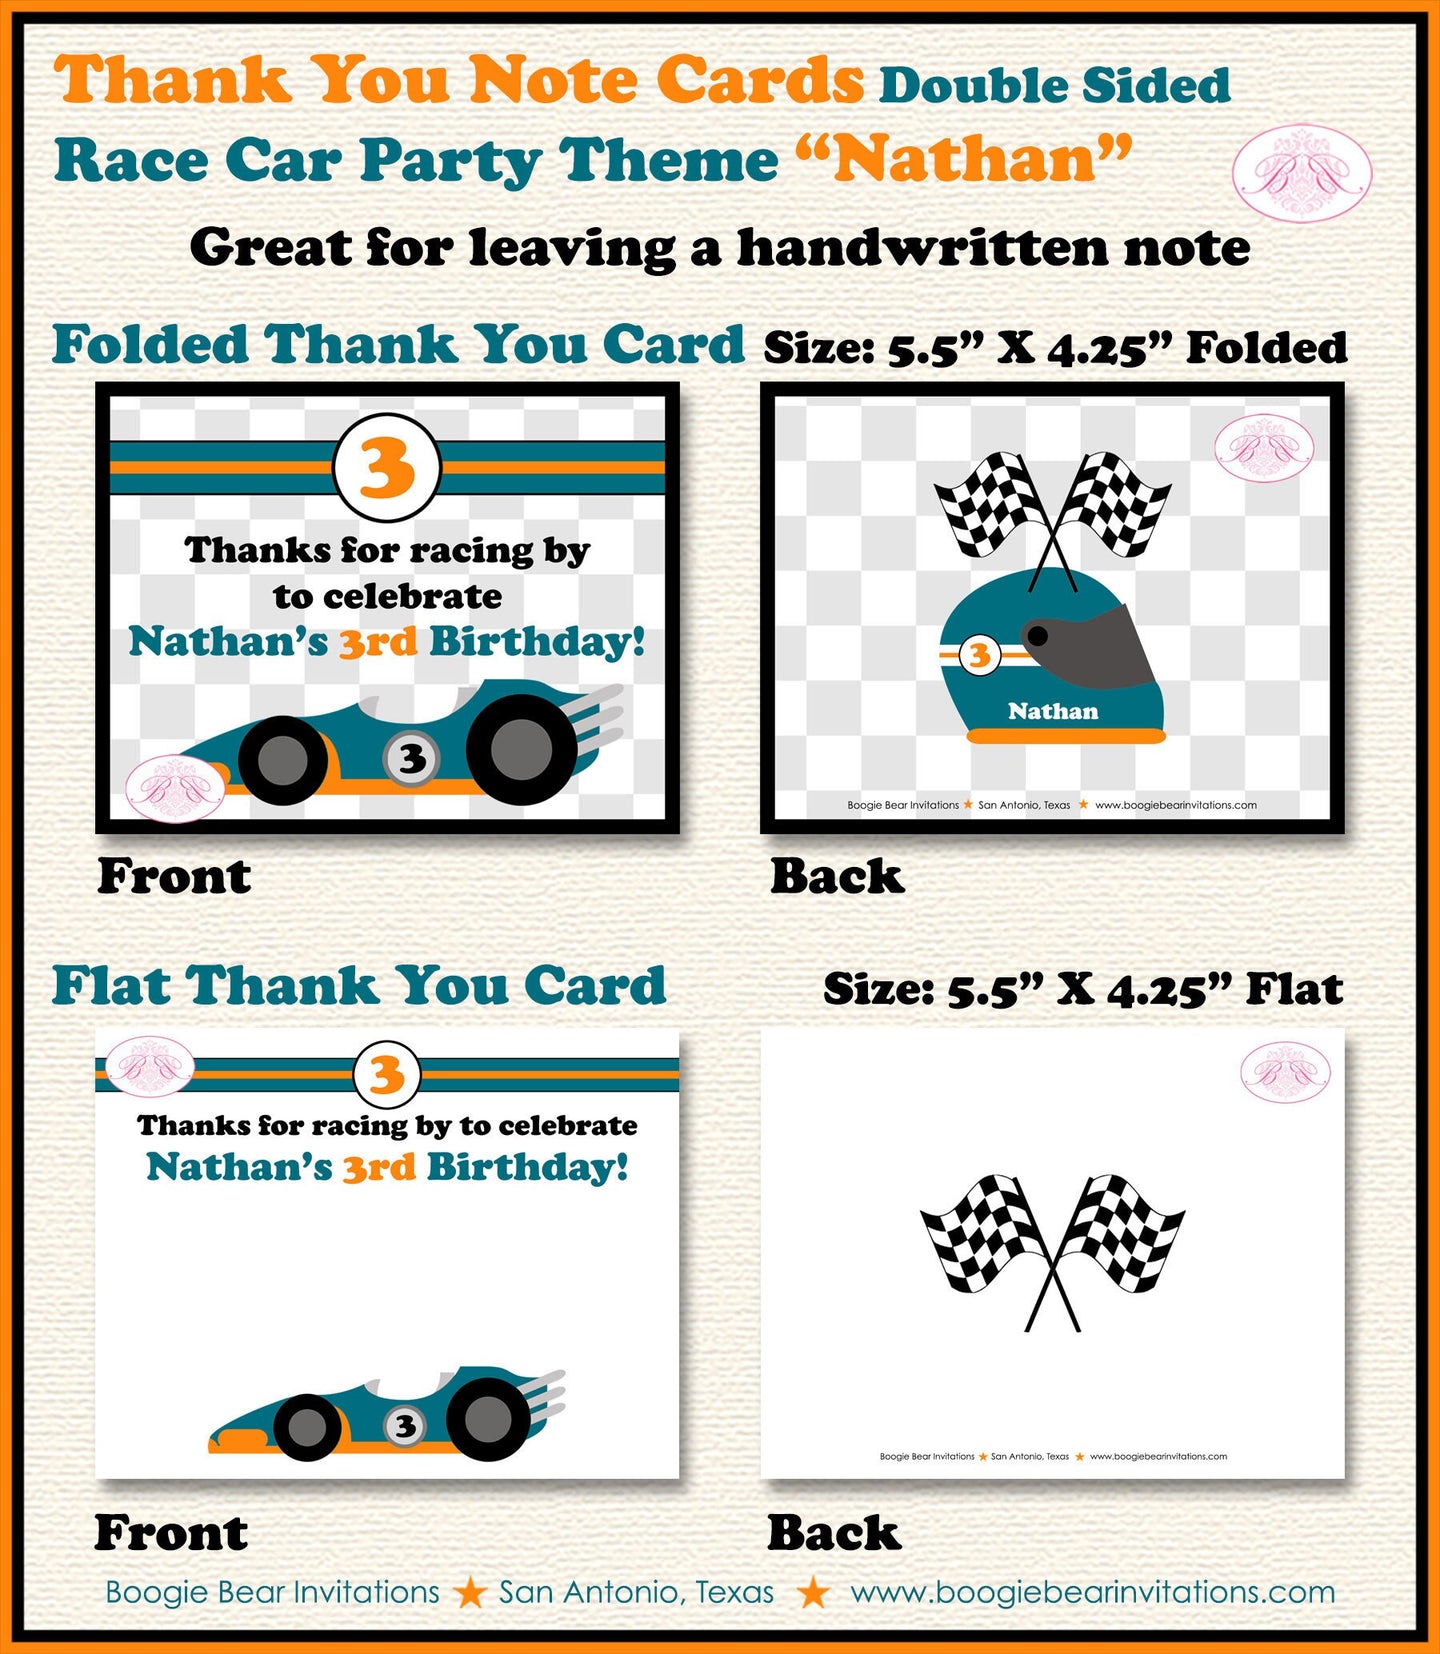 Race Car Party Thank You Card Black Birthday Boy Girl Orange Blue Black Grand Prix Racing Race Boogie Bear Invitations Nathan Theme Printed